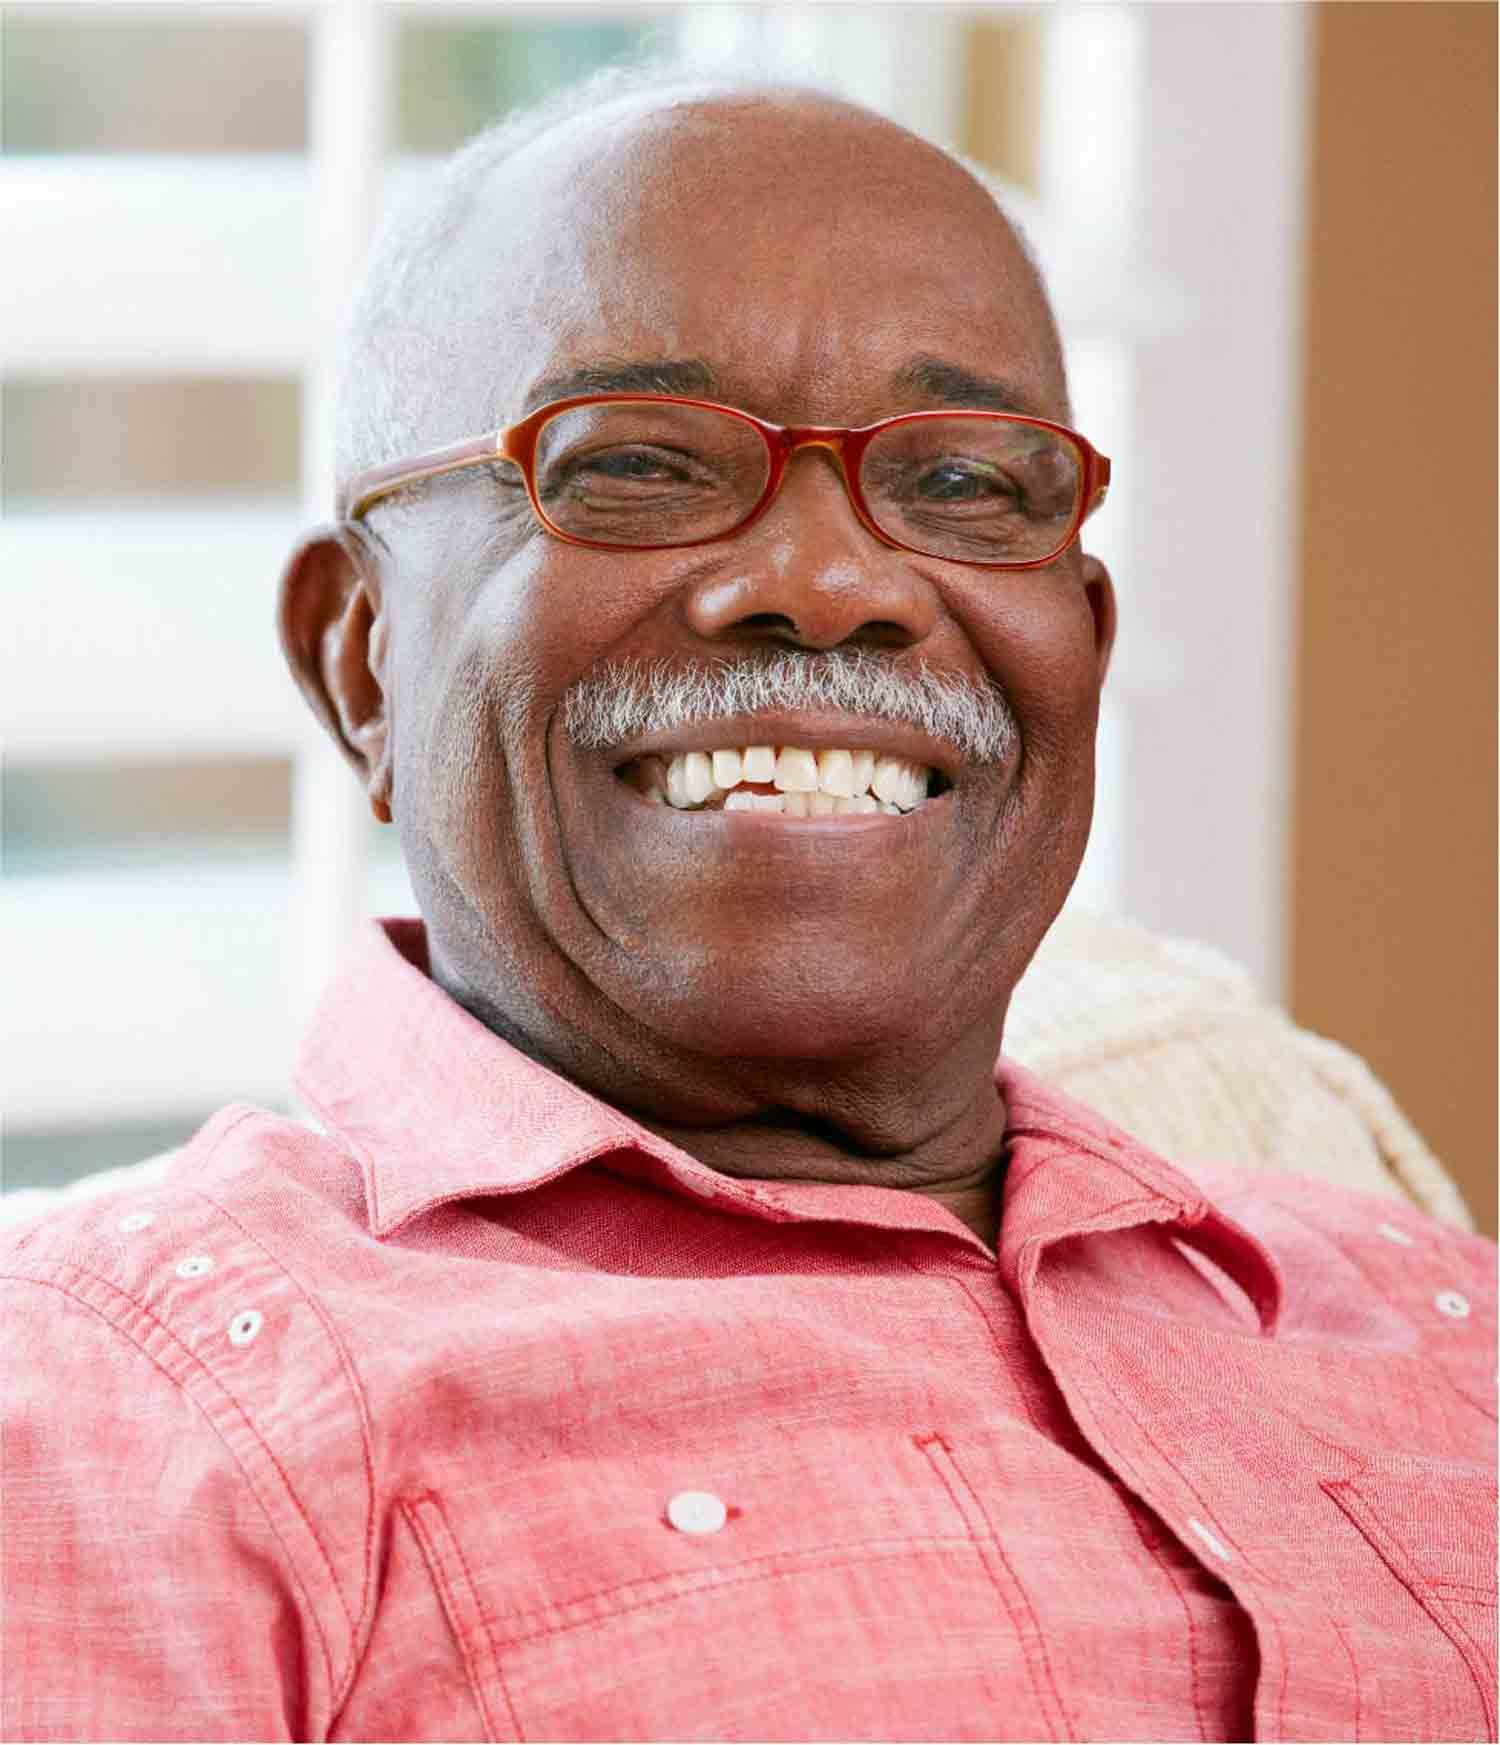 elderly man smiling